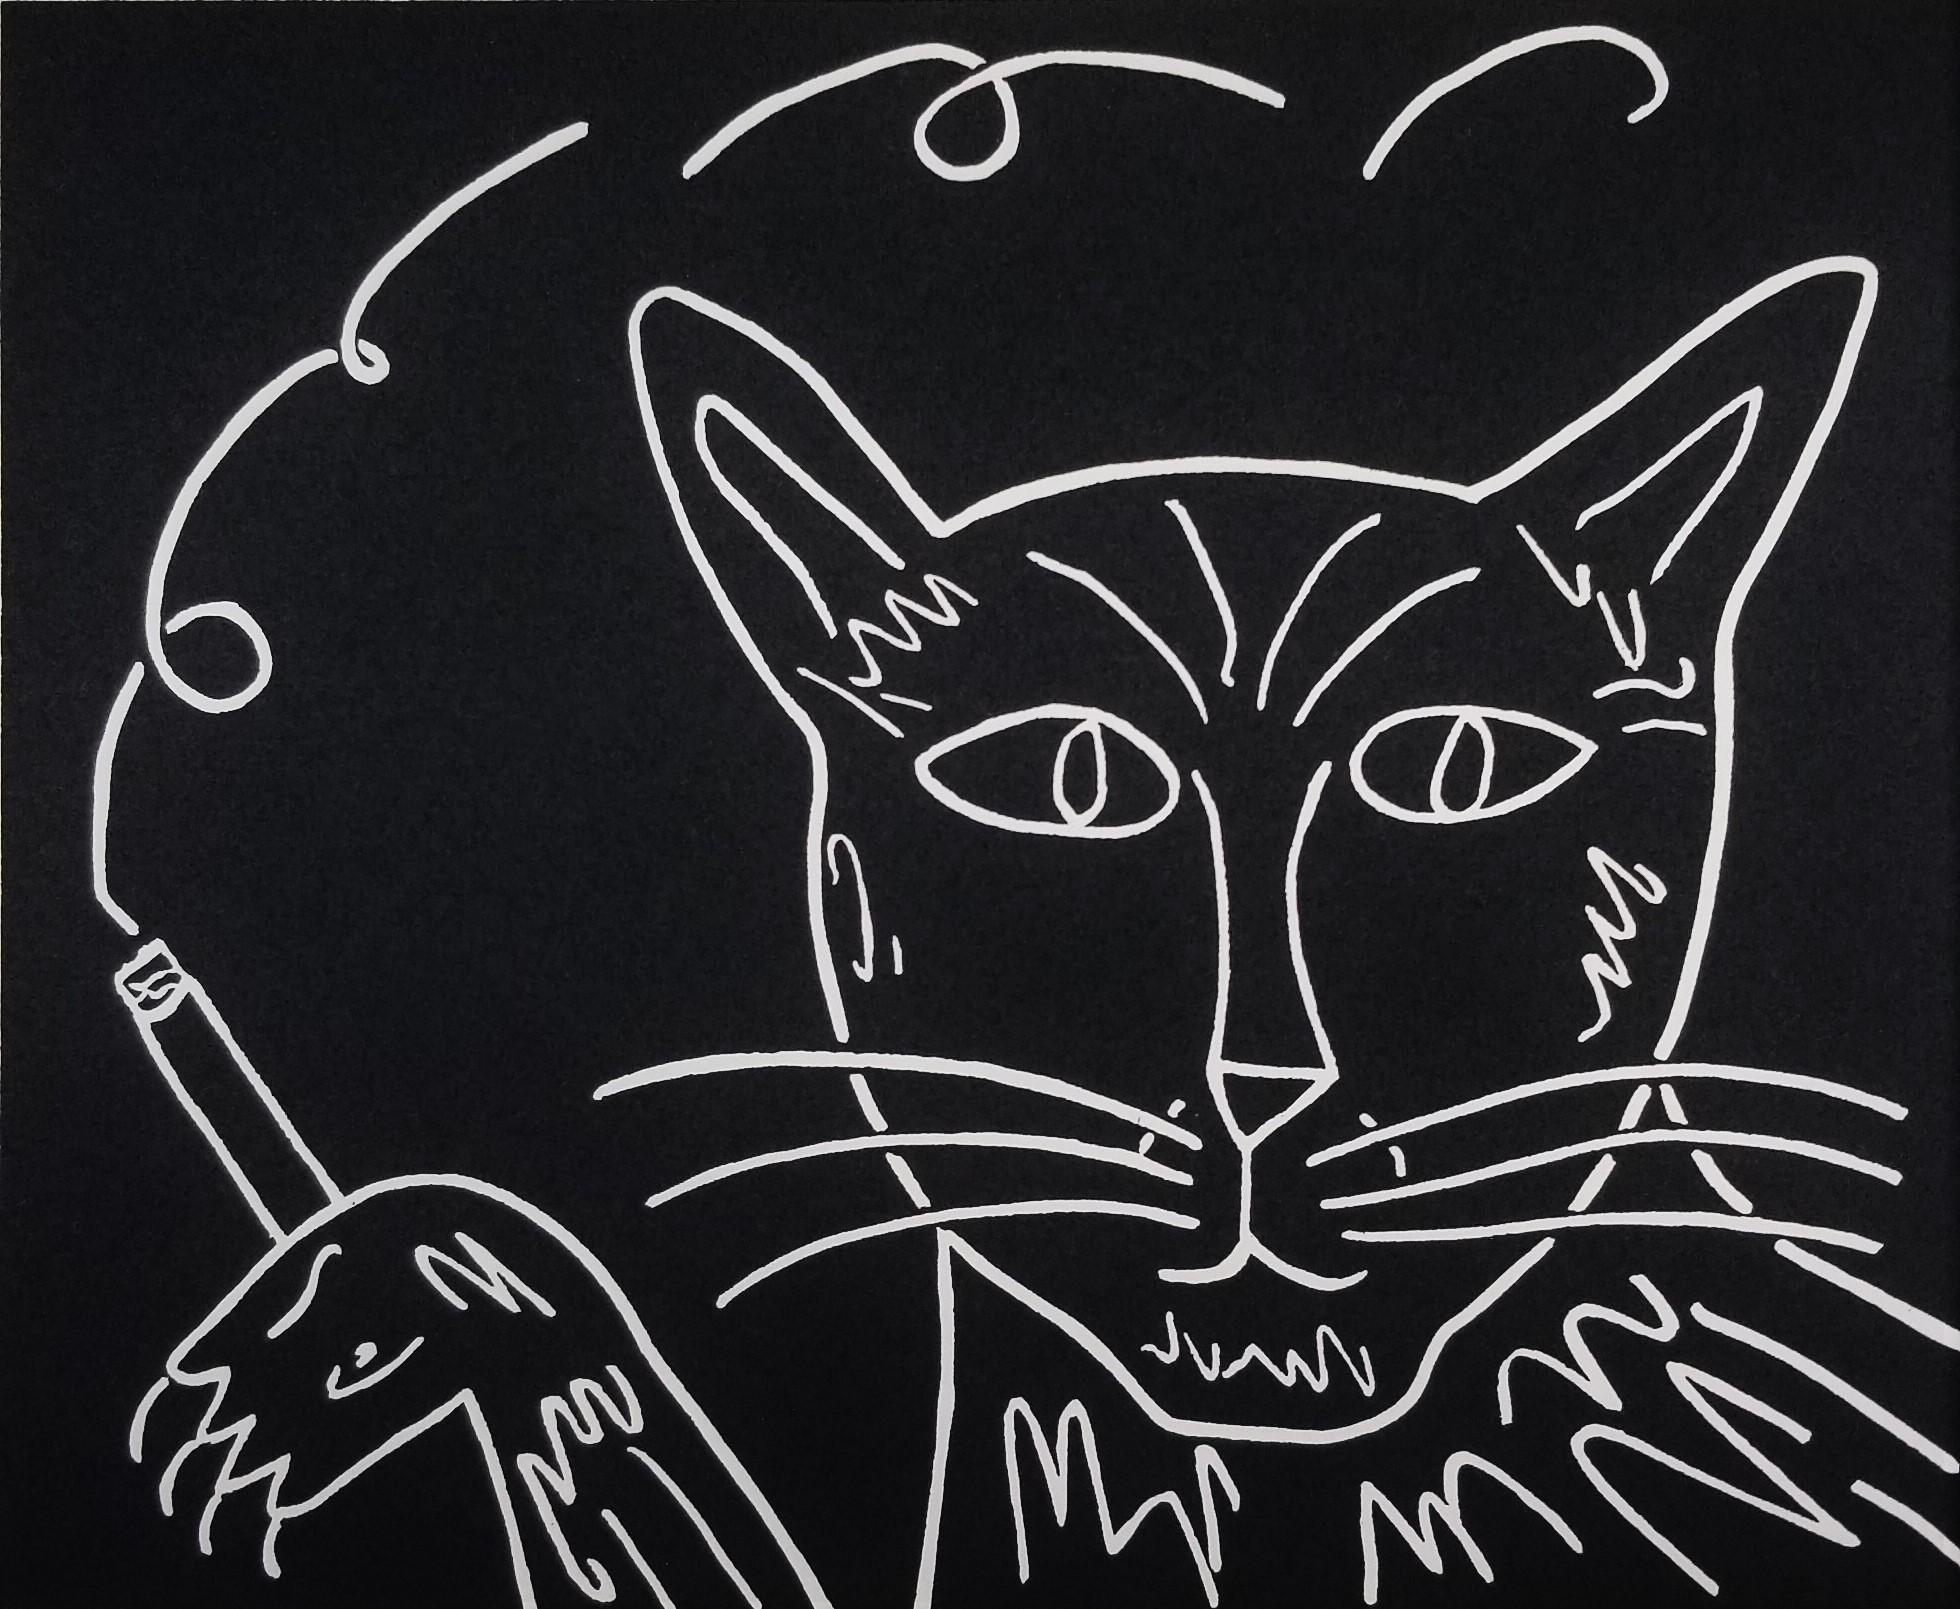 Dan May Animal Print - Cat with a Habit /// Contemporary Animal Smoking Humor Screenprint Black